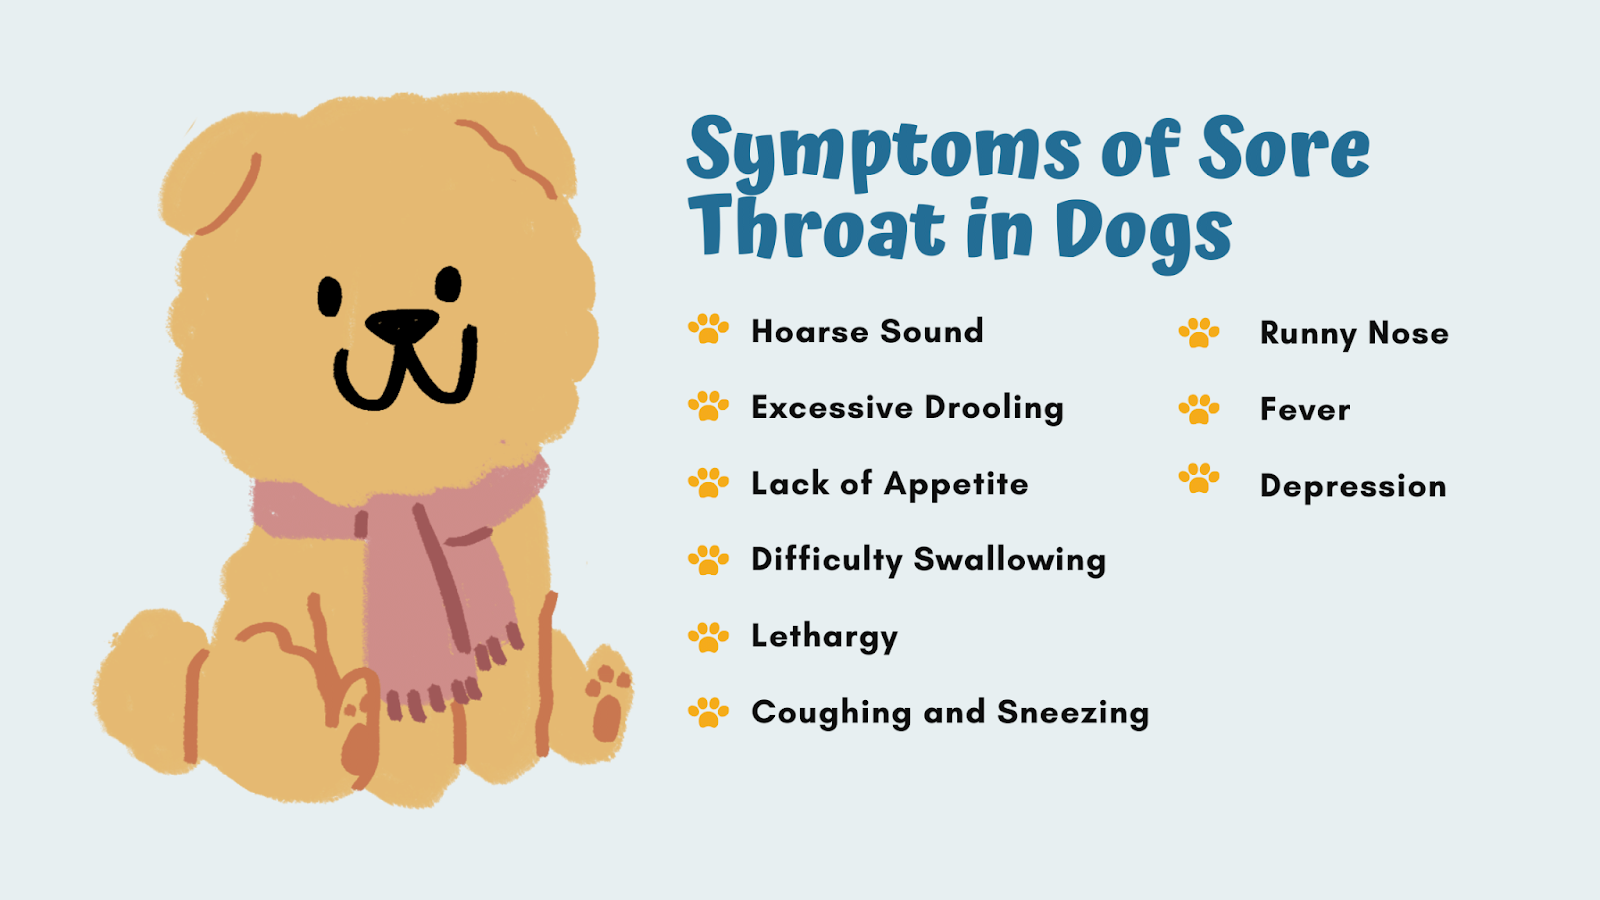 Symptoms of sore throat in dogs